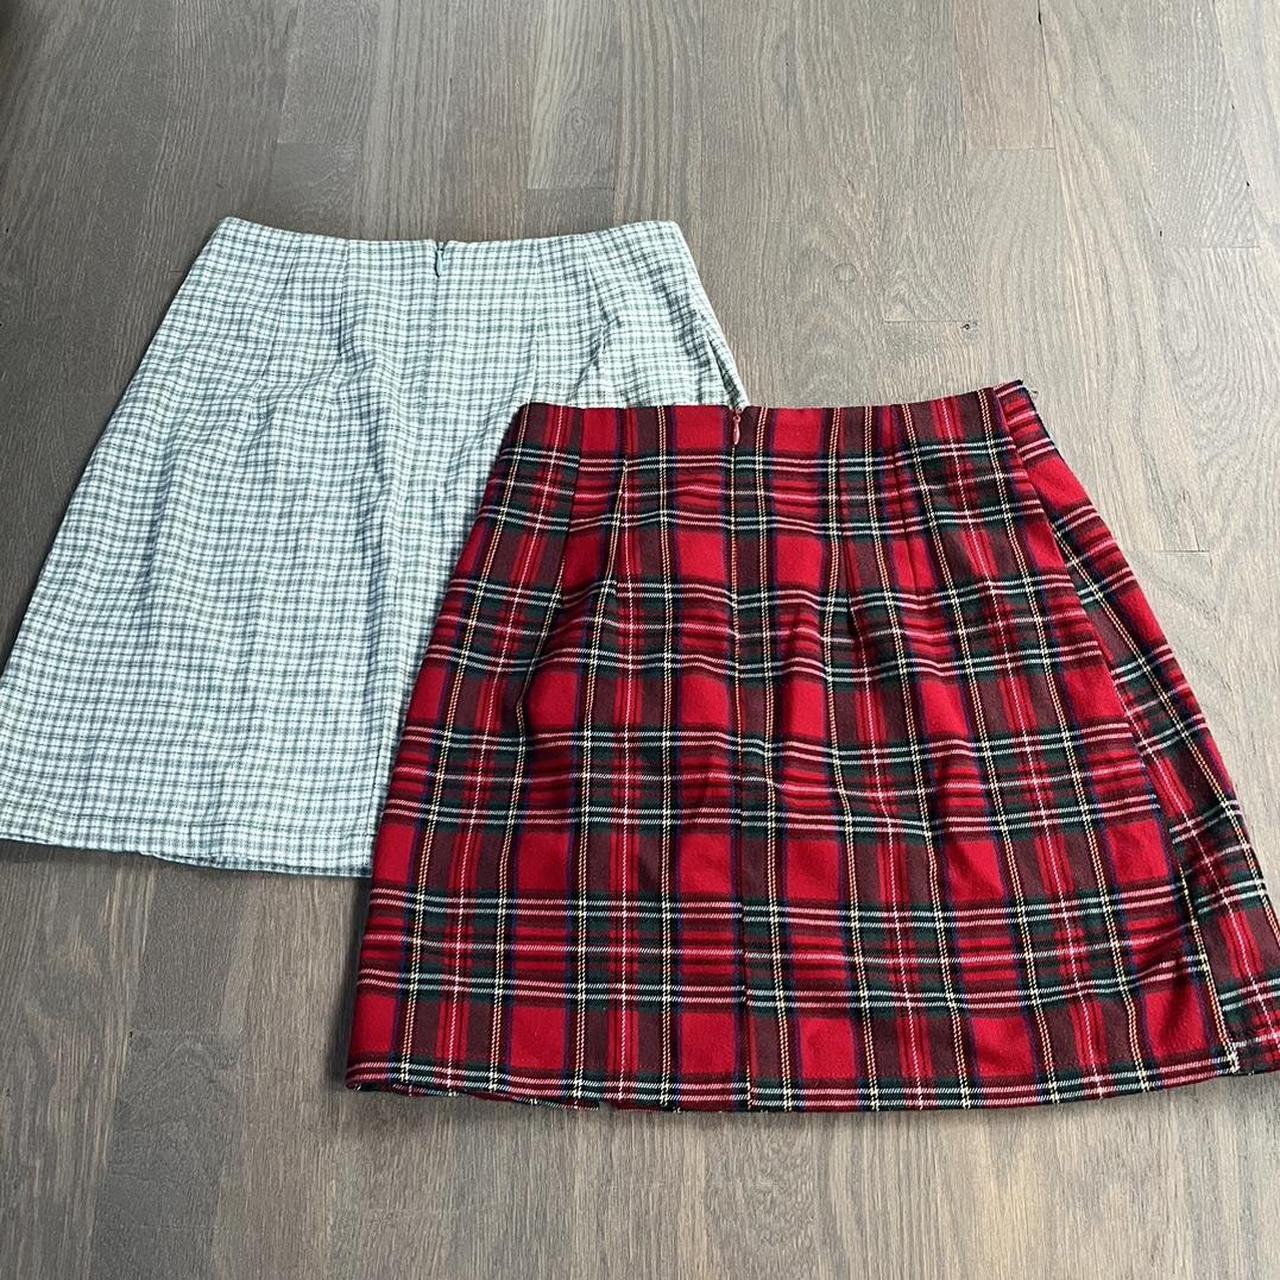 Brandy Melville Red Tartan Plaid Cara Skirt